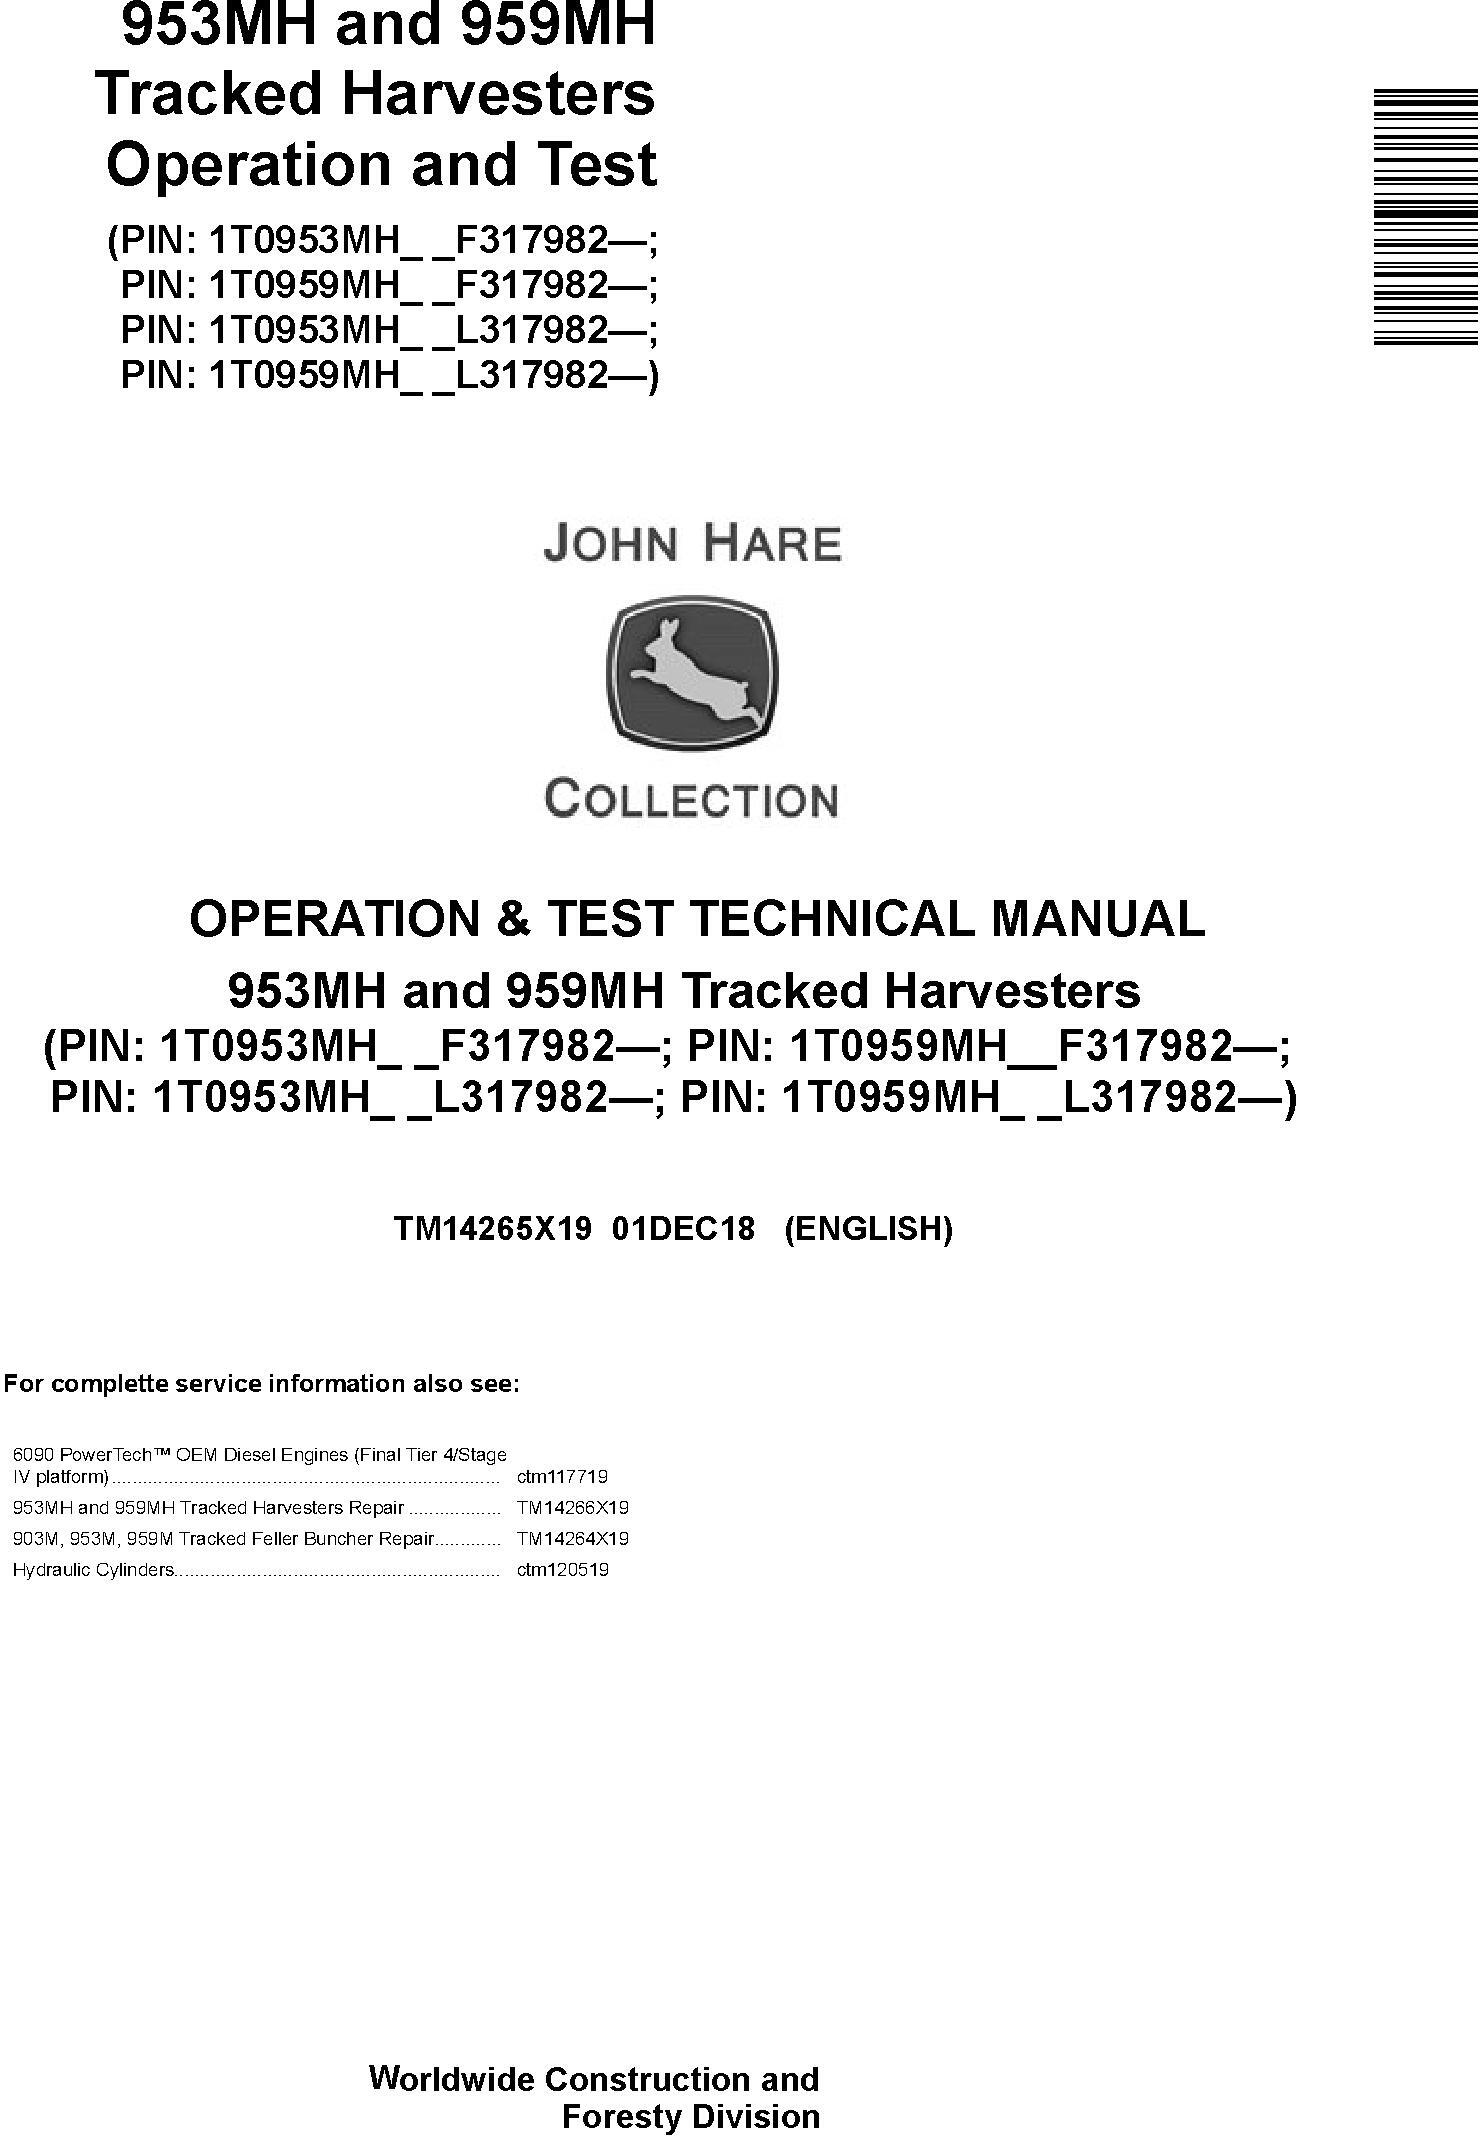 John Deere 953MH, 959MH (SN. F317982-, L317982-) Tracked Harvesters Diagnostic Manual (TM14265X19)